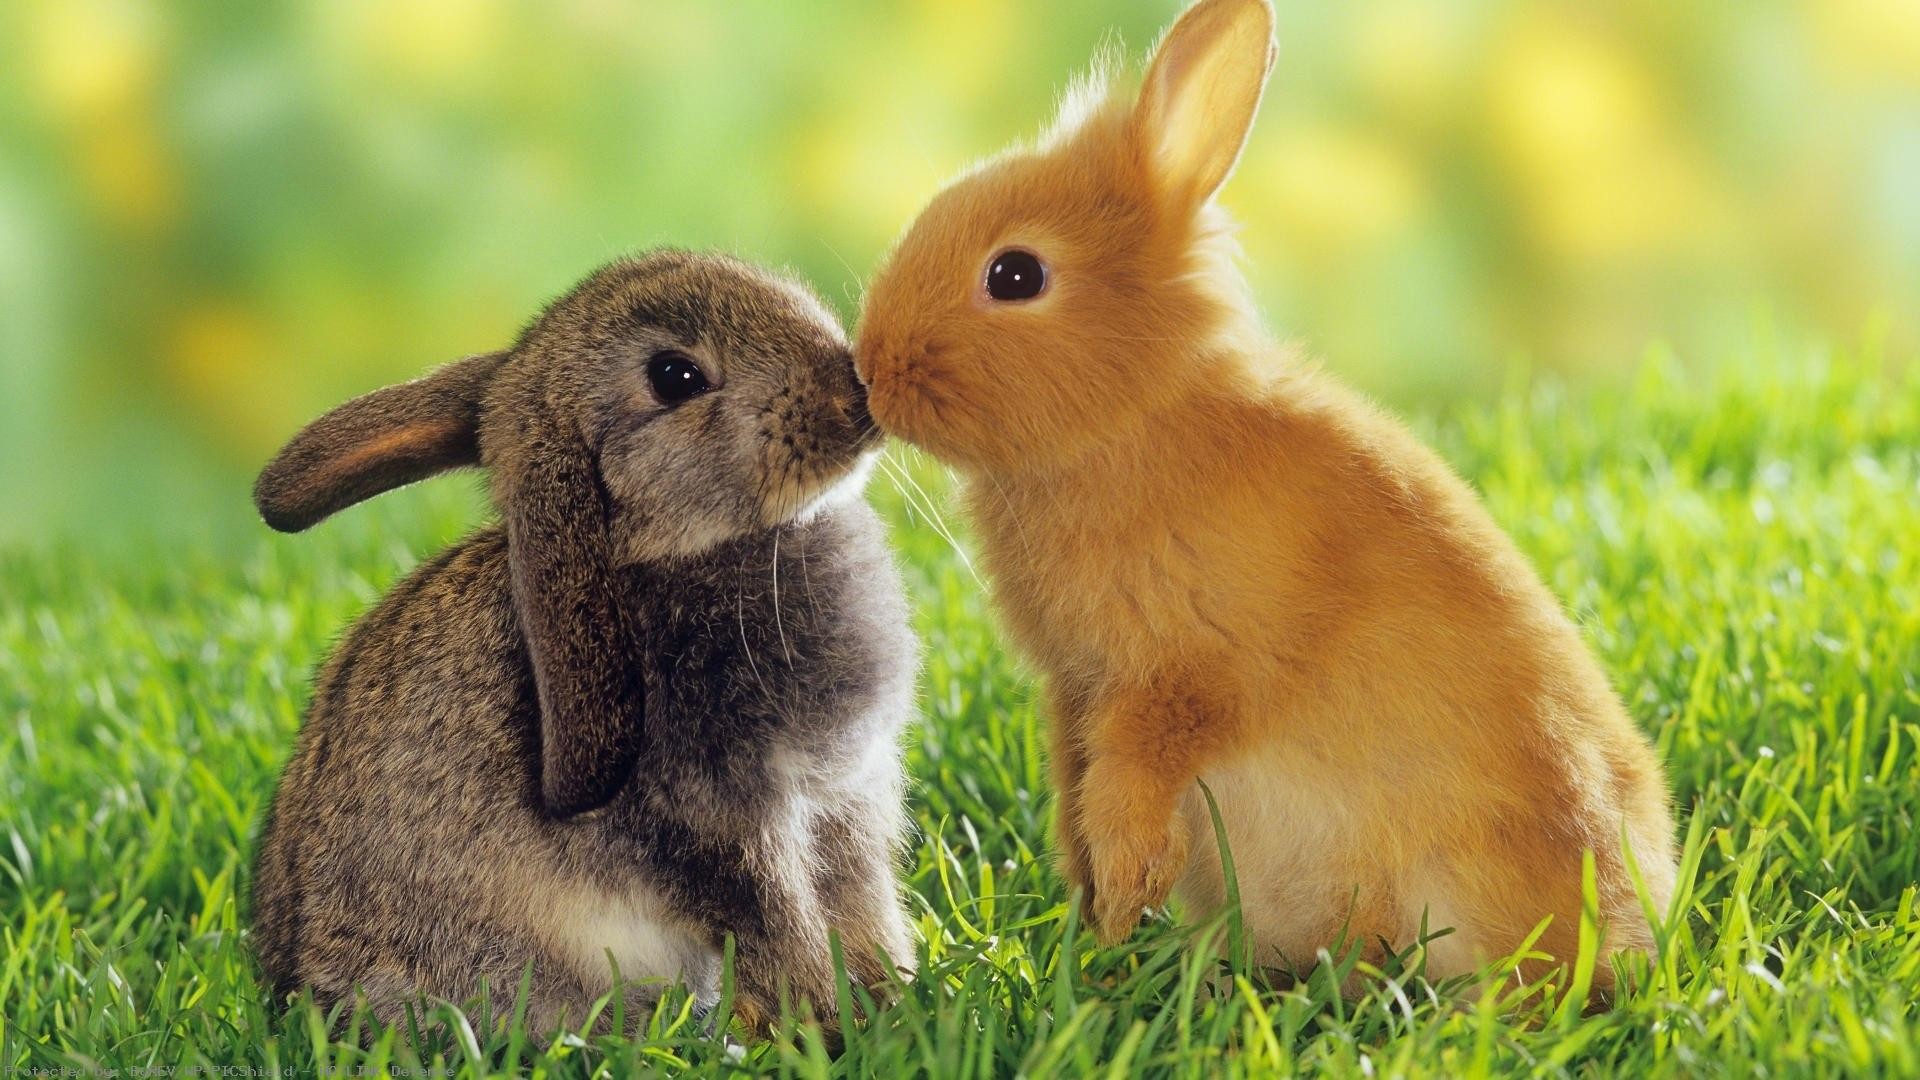 1920x1080 Adorable-Animals-Look-at-this-cute-bunny-Description-